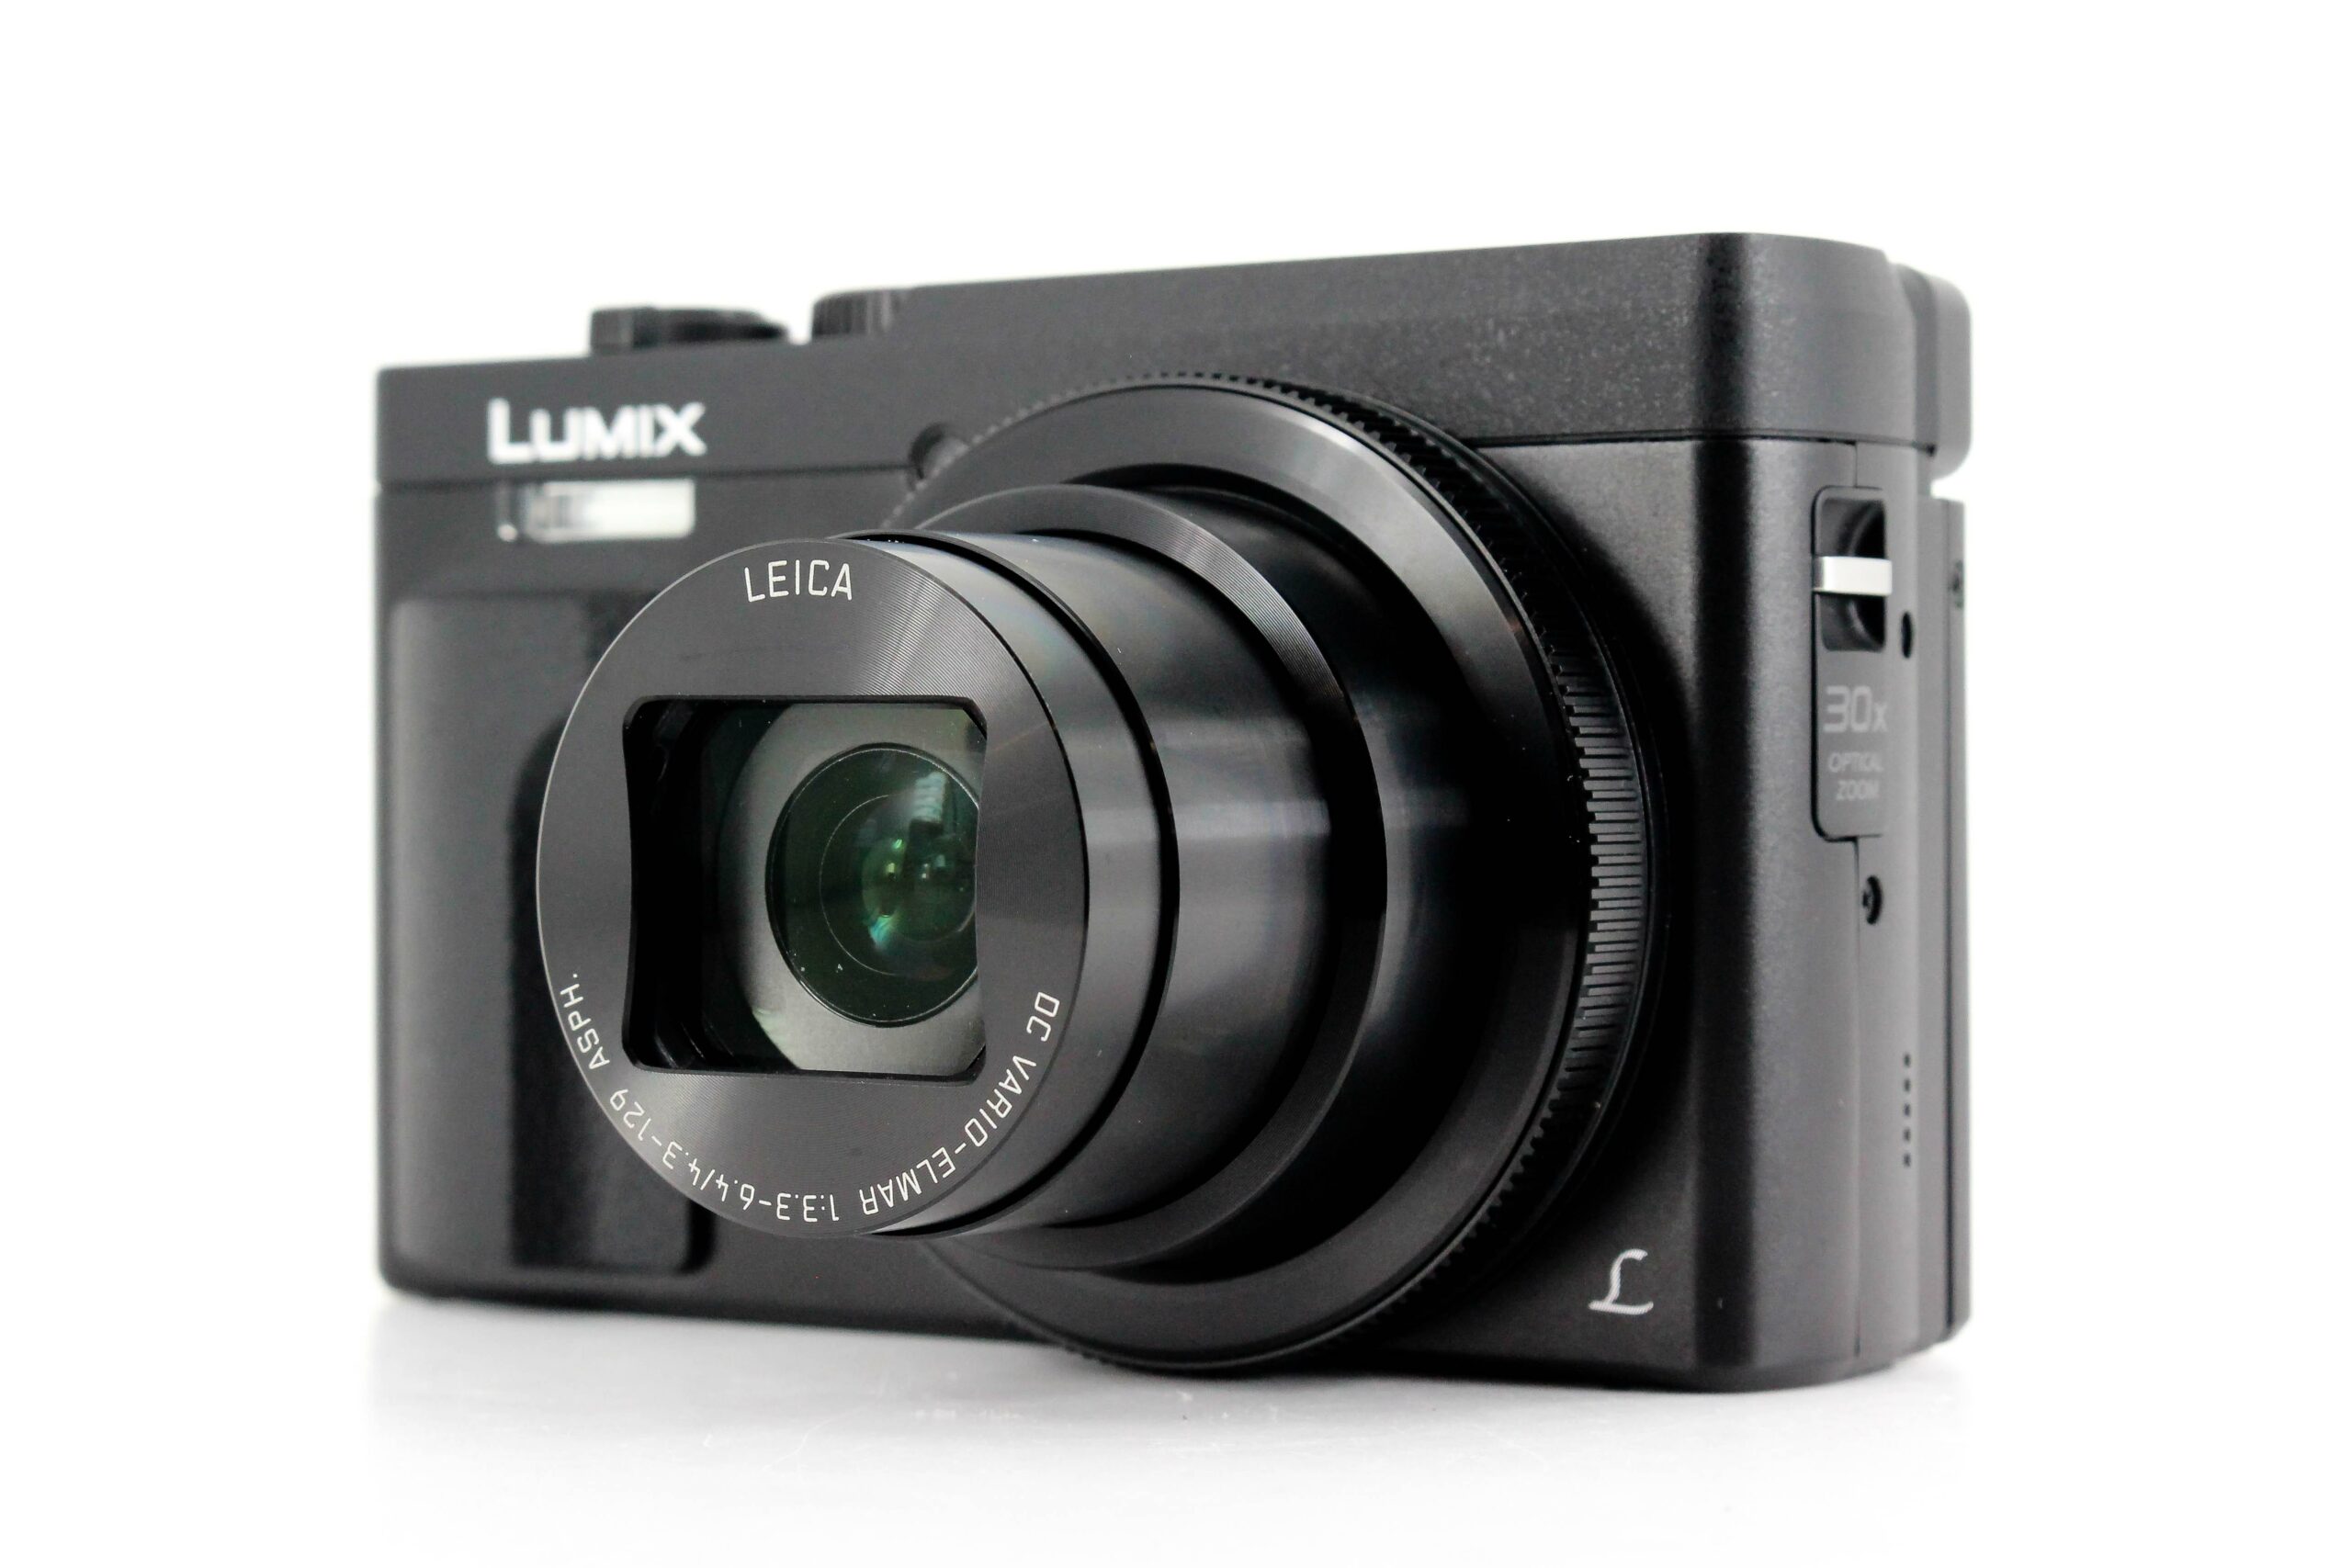 Charles Keasing Ik zie je morgen Integratie Panasonic Lumix DC-TZ90 20.3MP Compact Camera -Black - Lenses and Cameras